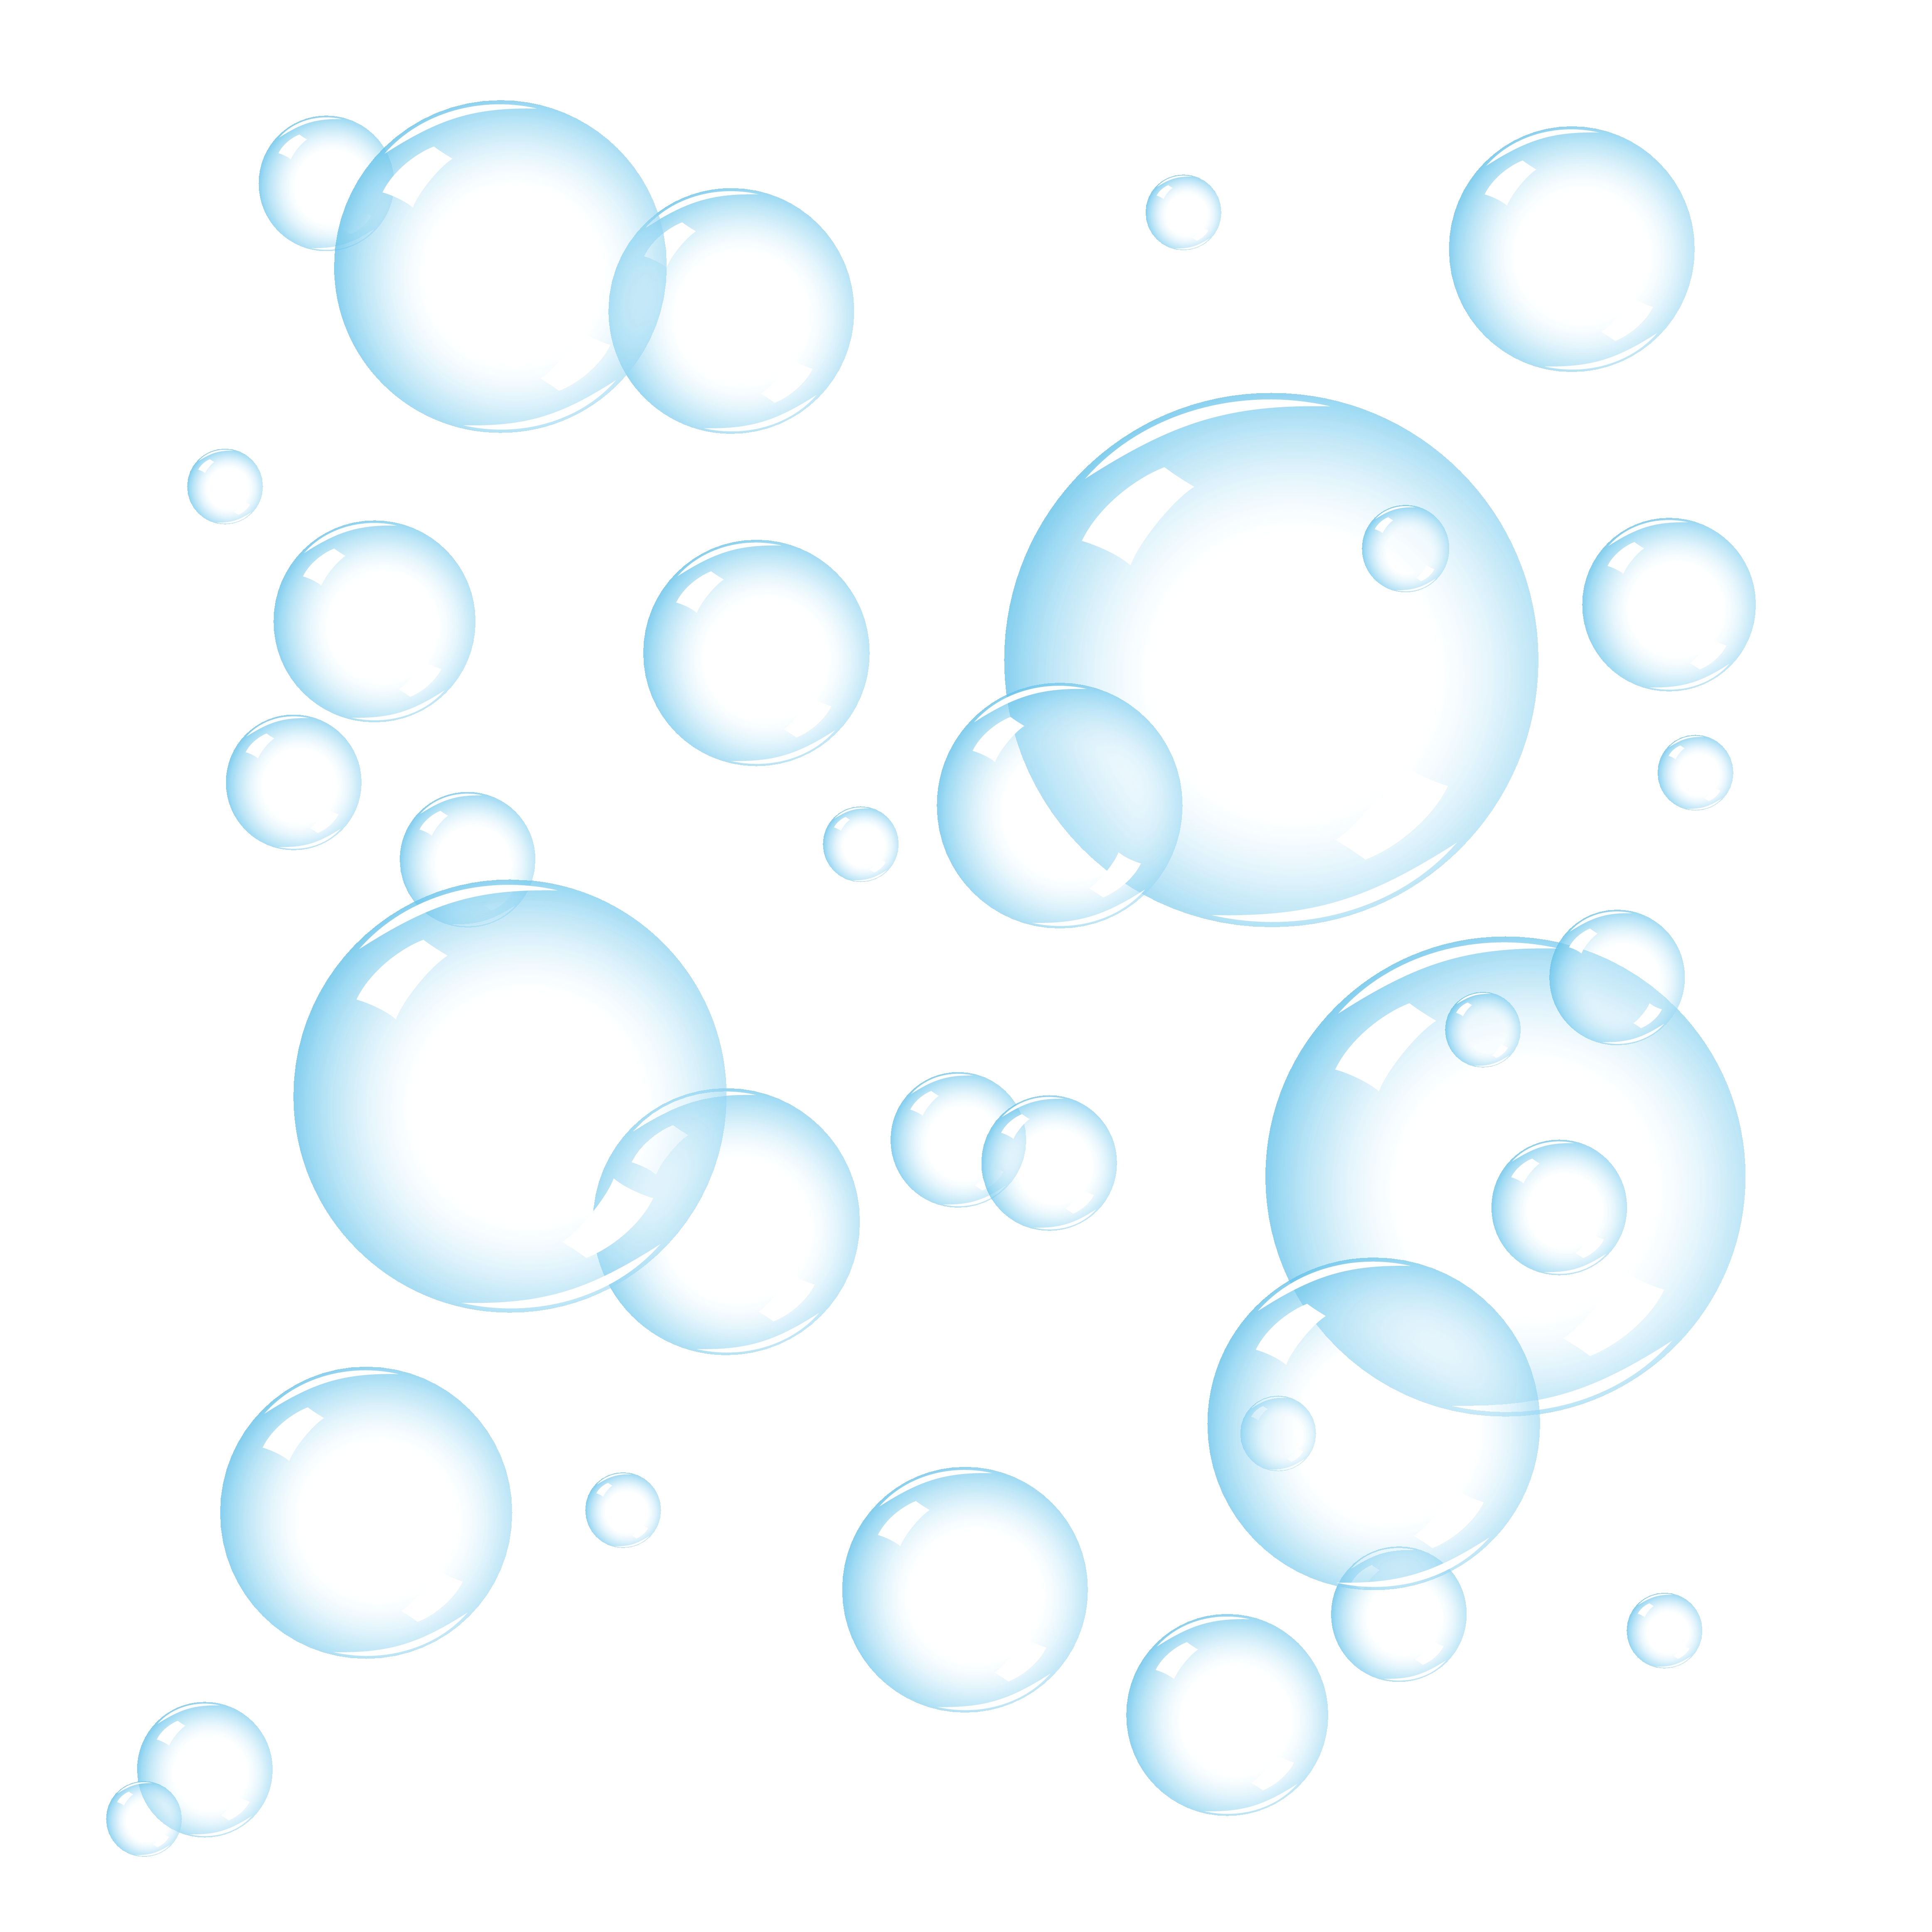 Free Bubbles Png Images, Download Free Bubbles Png Images png images